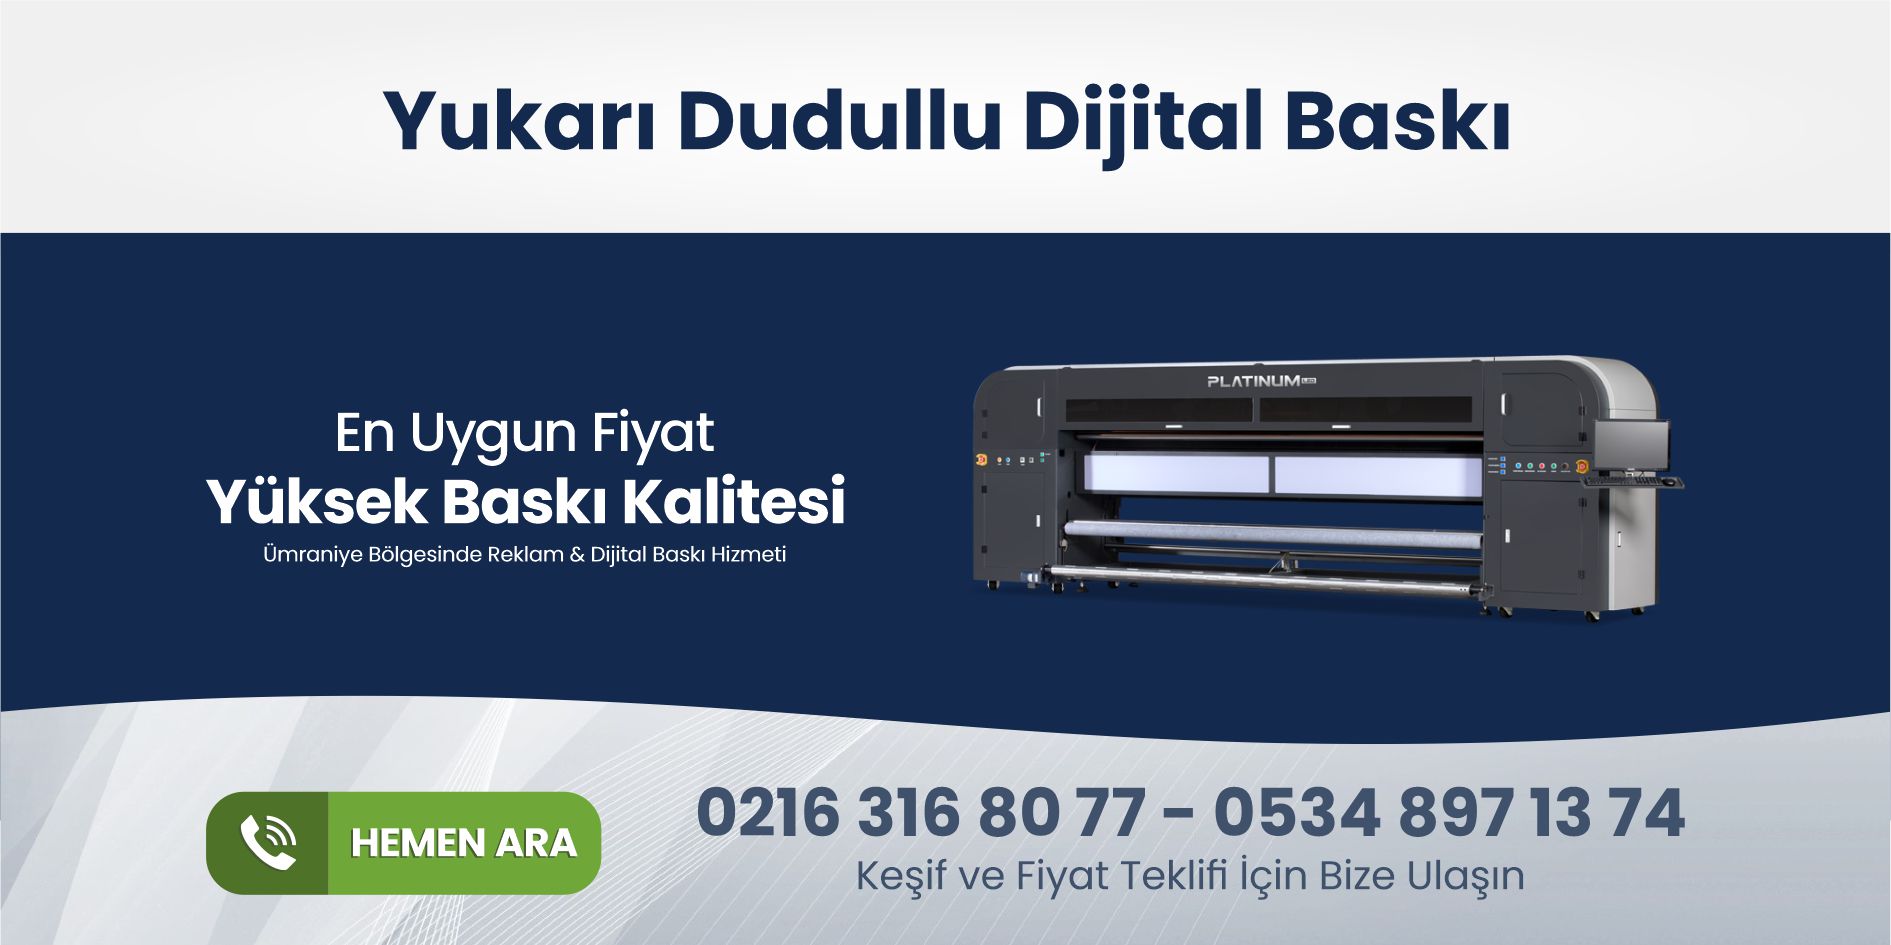 You are currently viewing Yukarı Dudullu Dijital Baskı